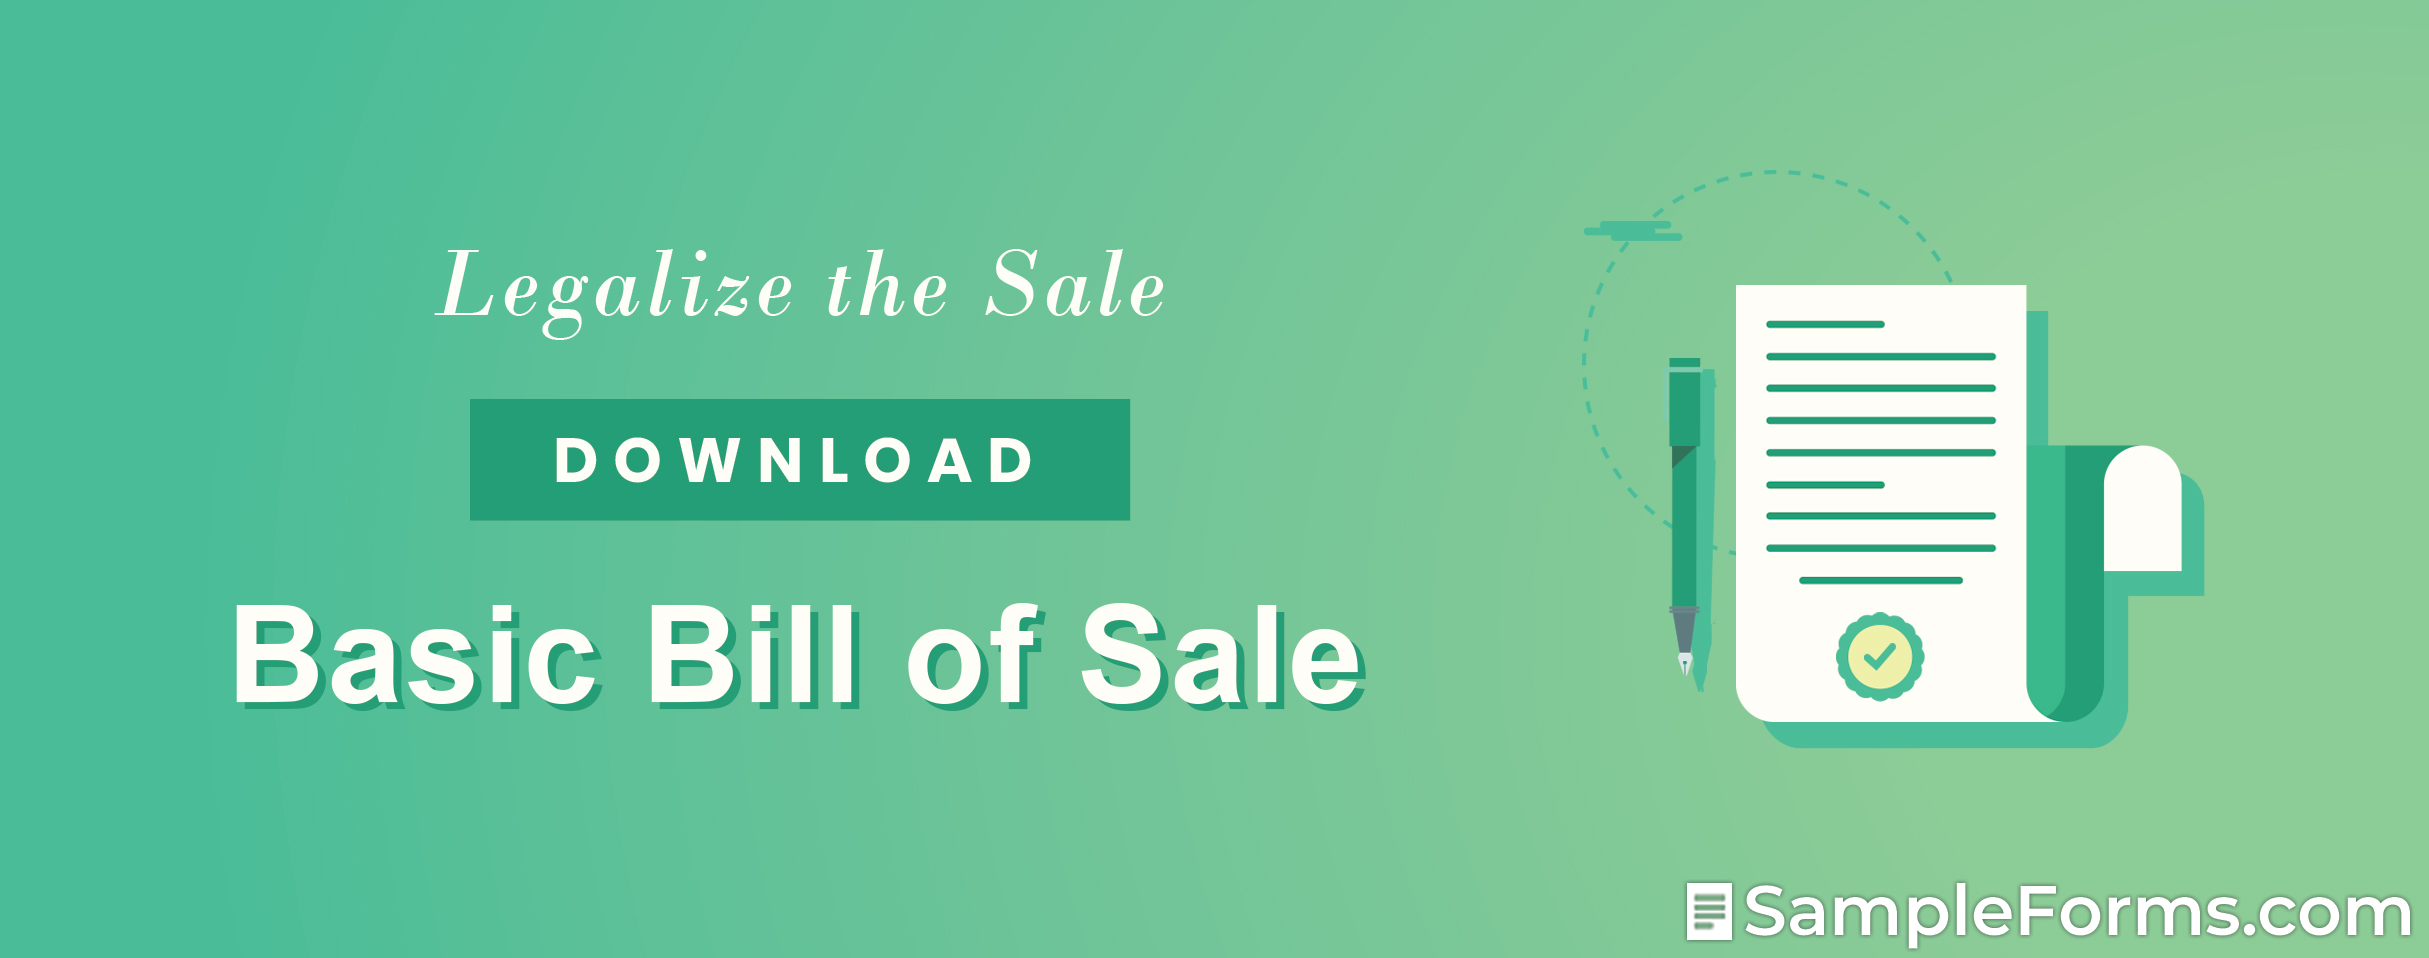 Basic Bill of Sale1